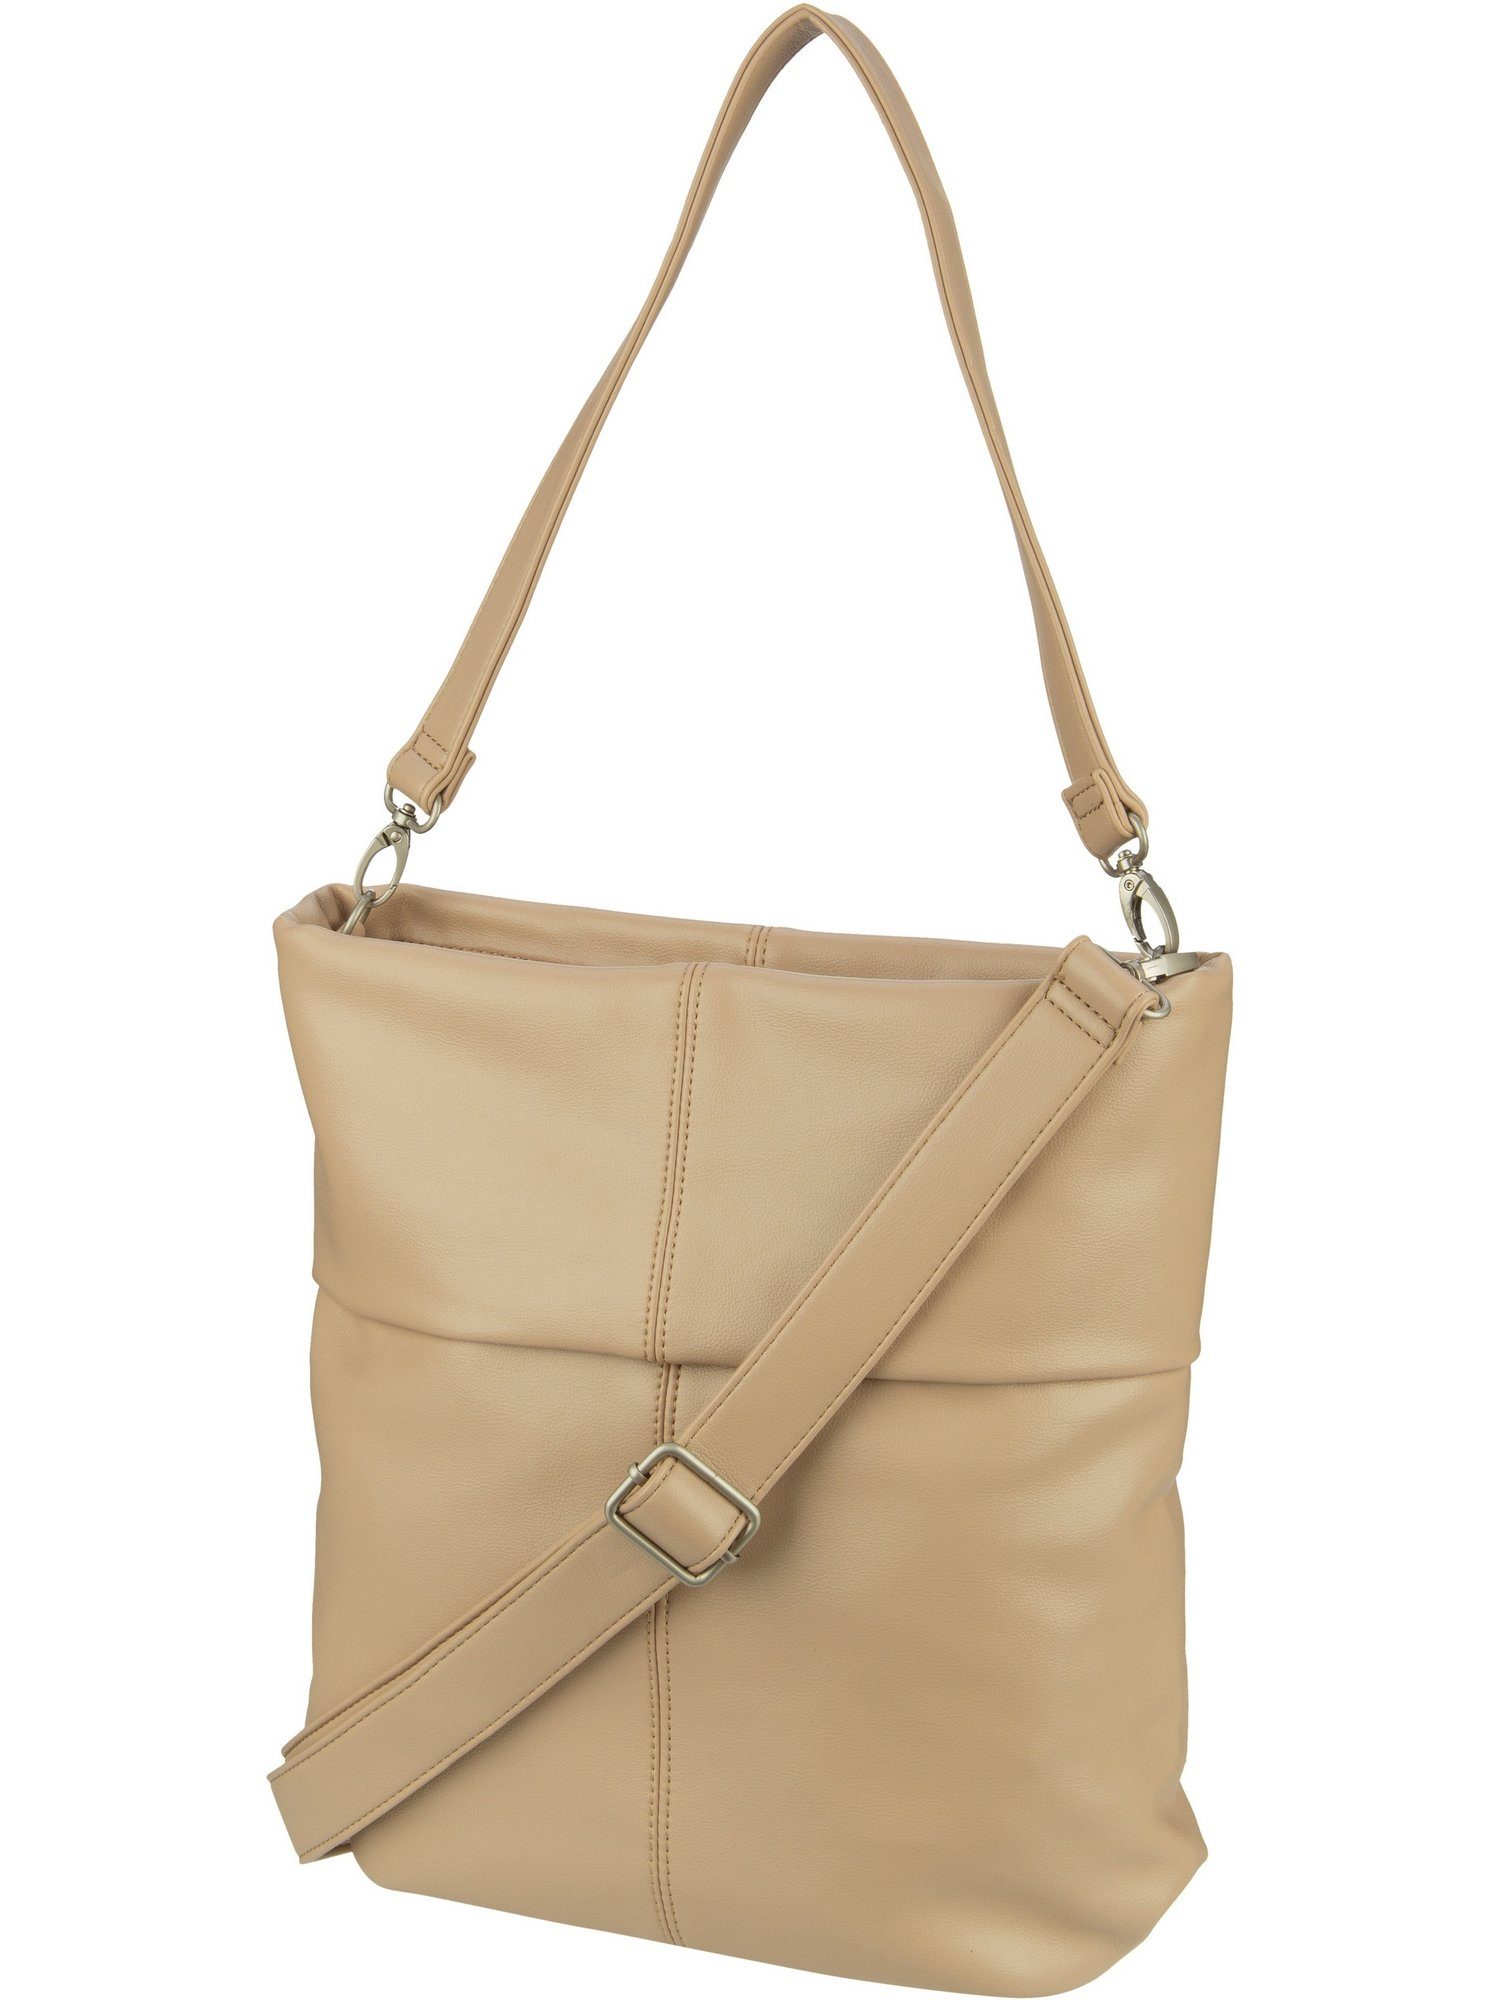 Handtasche Zwei Hobo Bag M12, Mademoiselle Oat